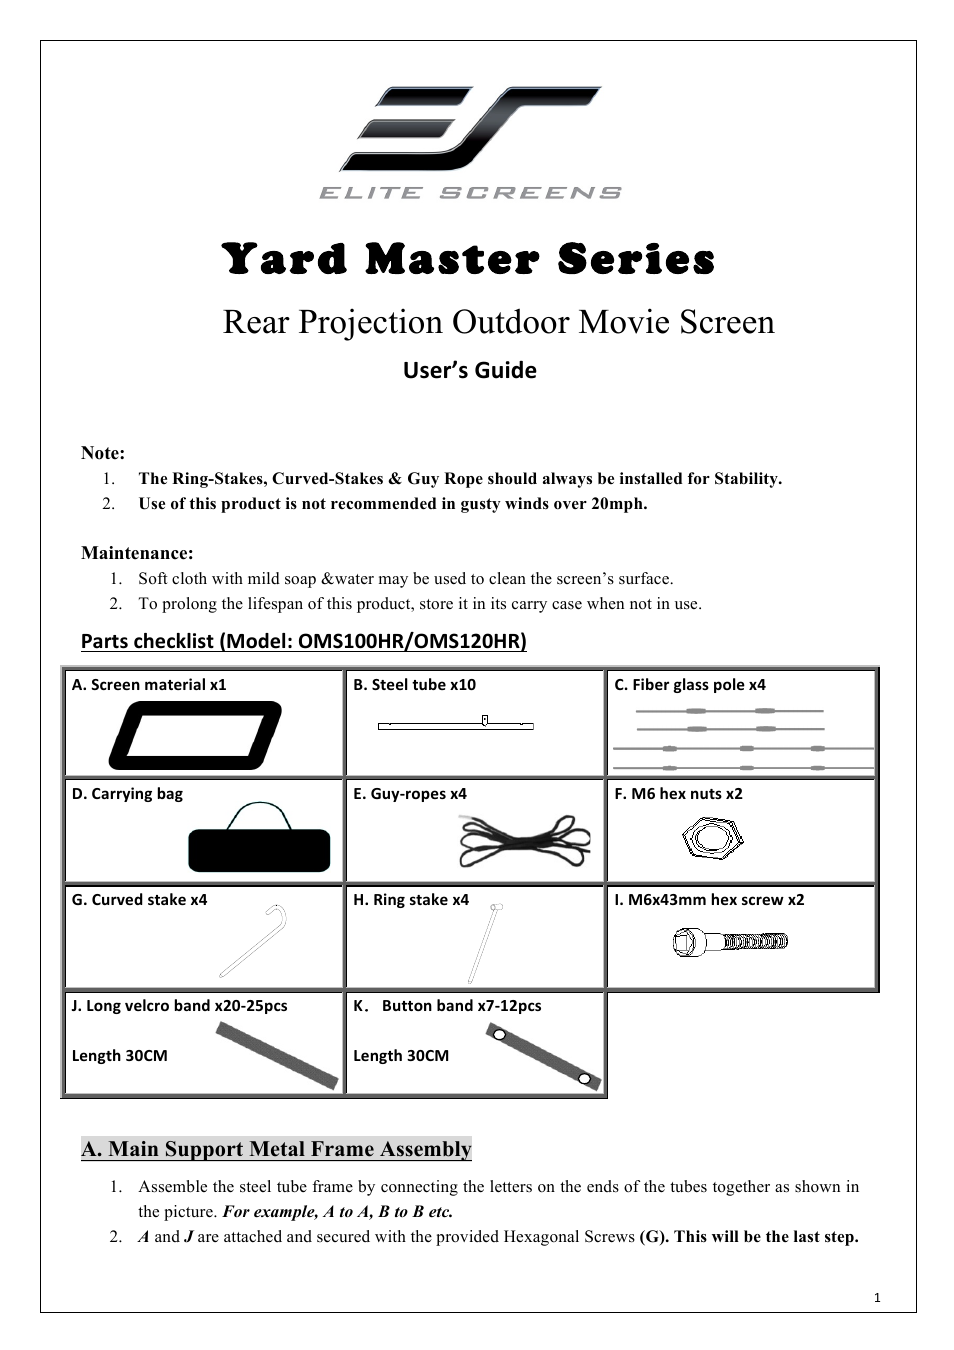 Yard Master(Rear)